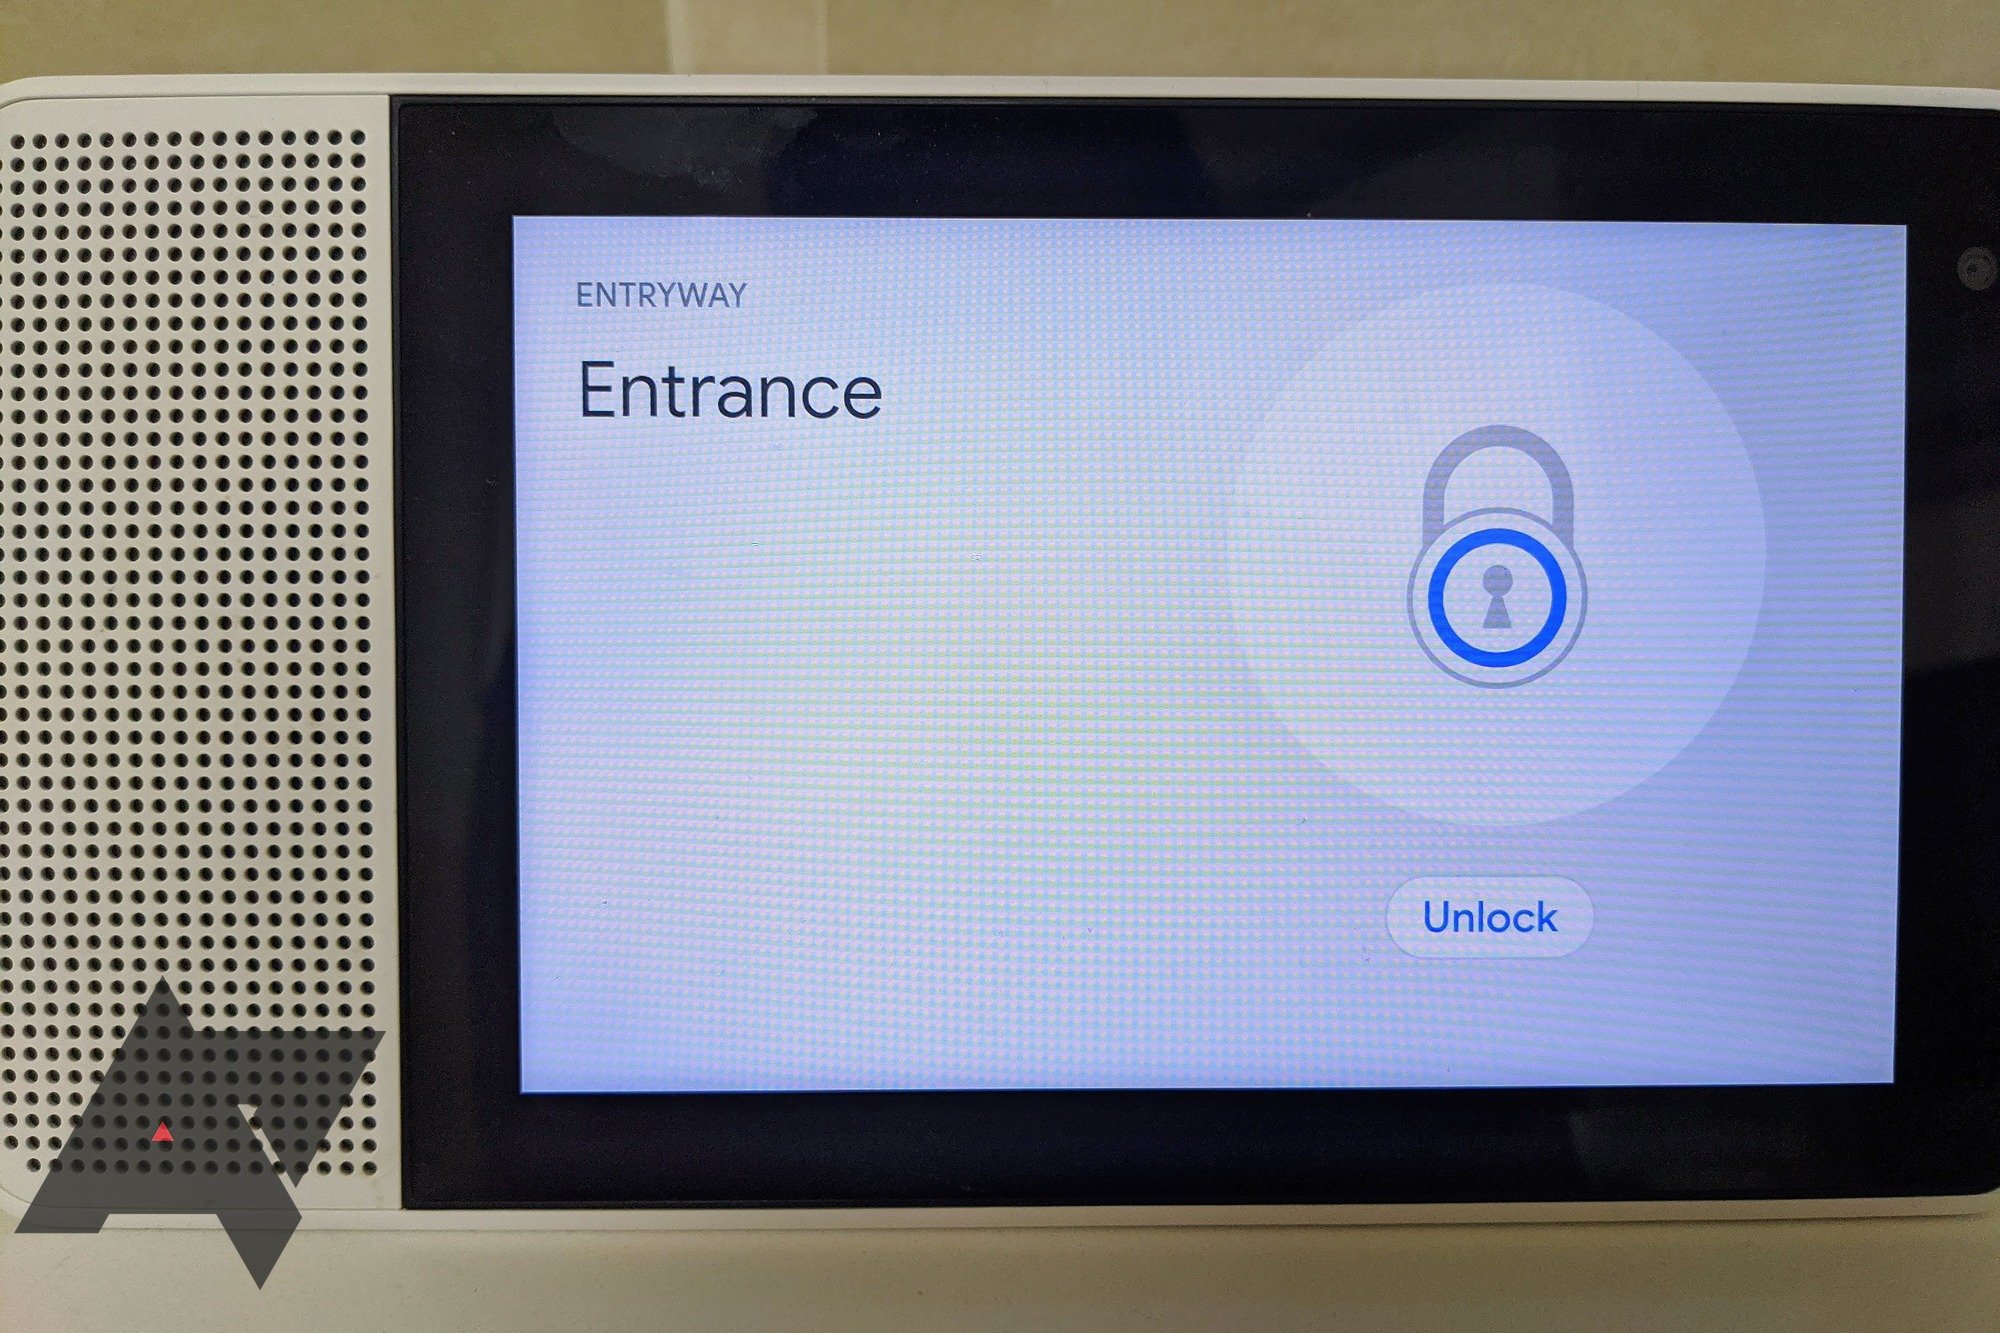 Assistant Display Smart Home Controls